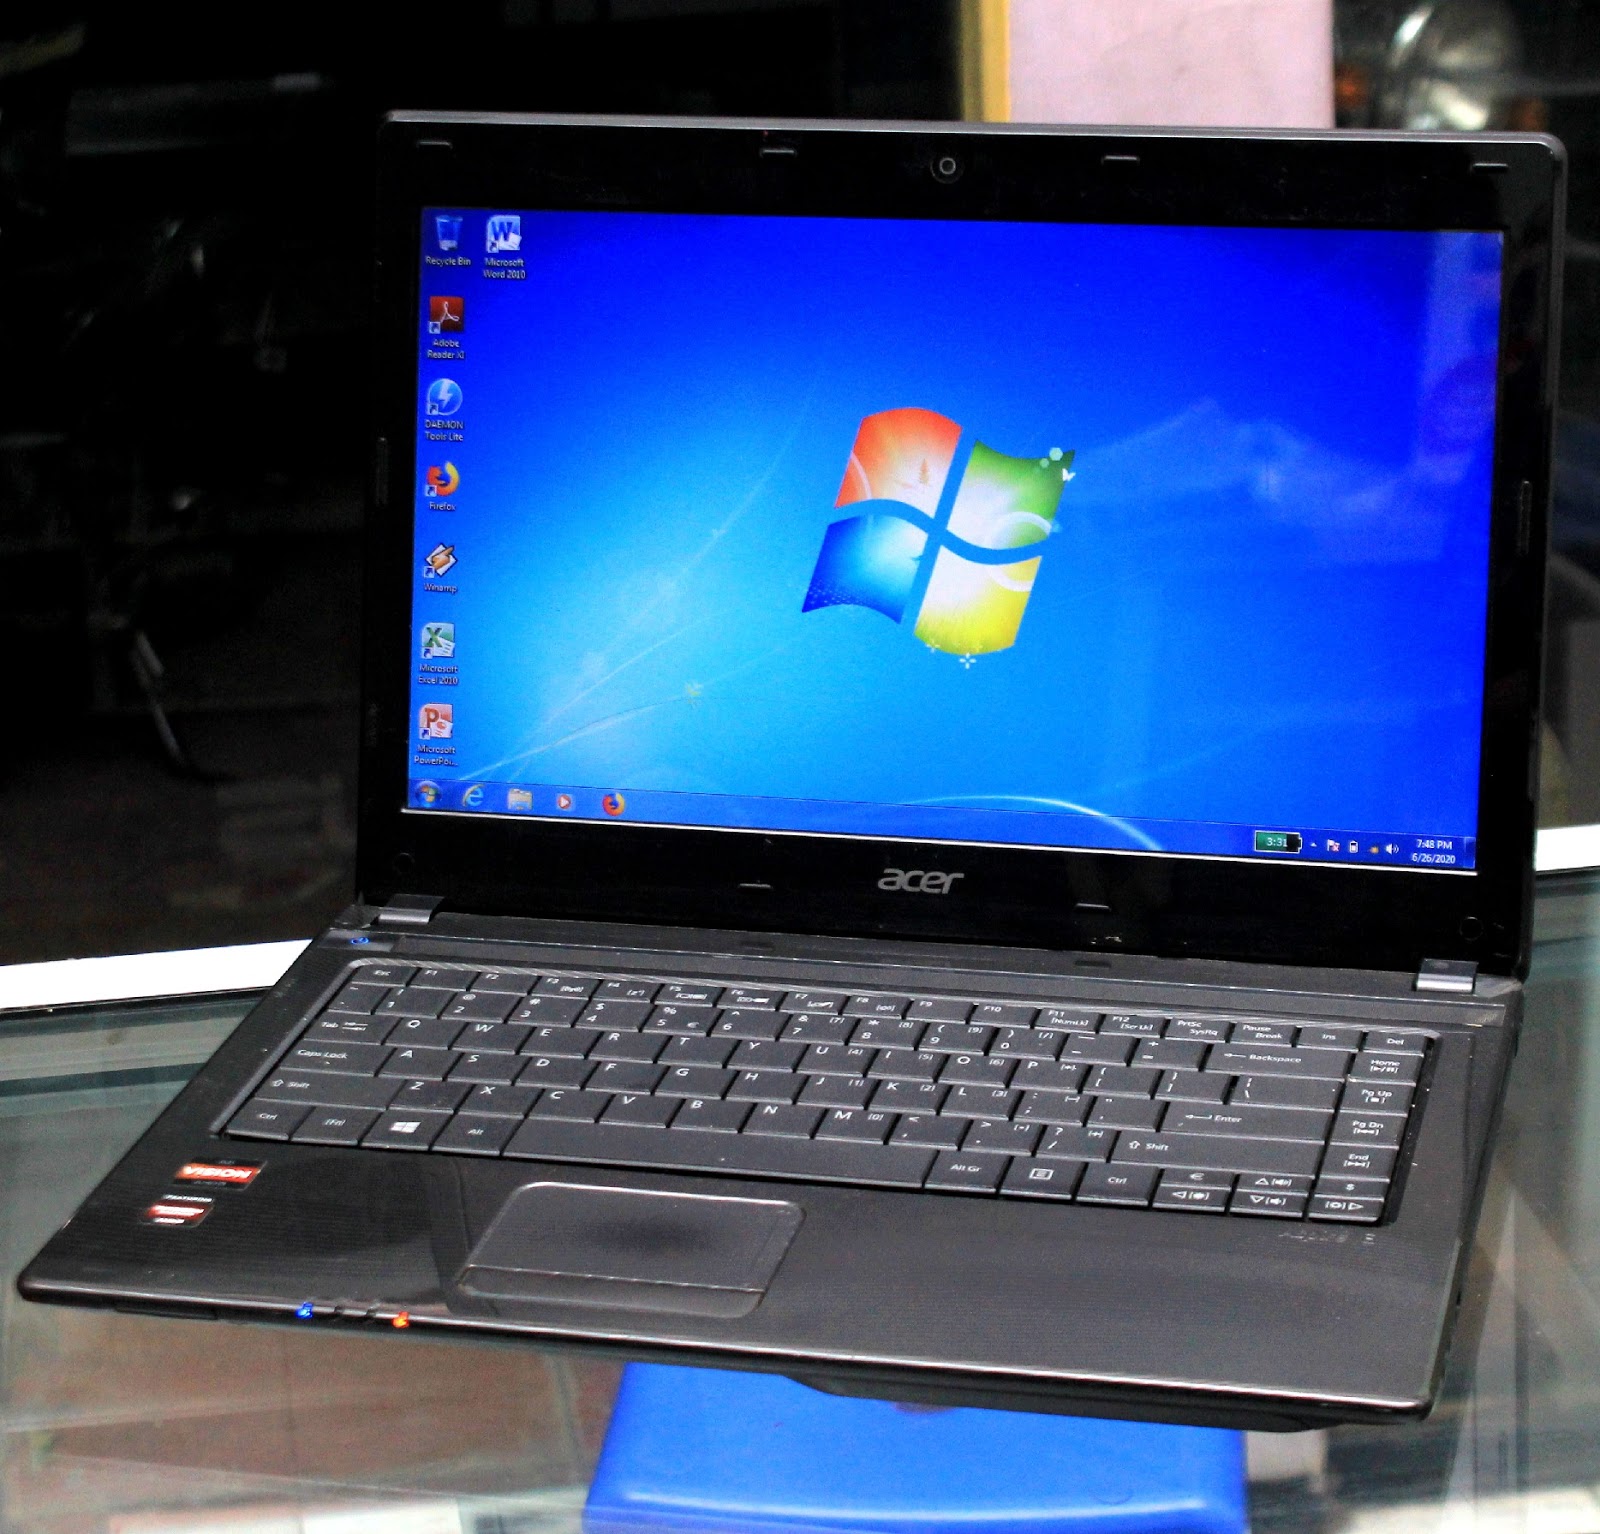 Jual Laptop Acer Aspire E1-451G ( Double VGA ) | Jual Beli ...